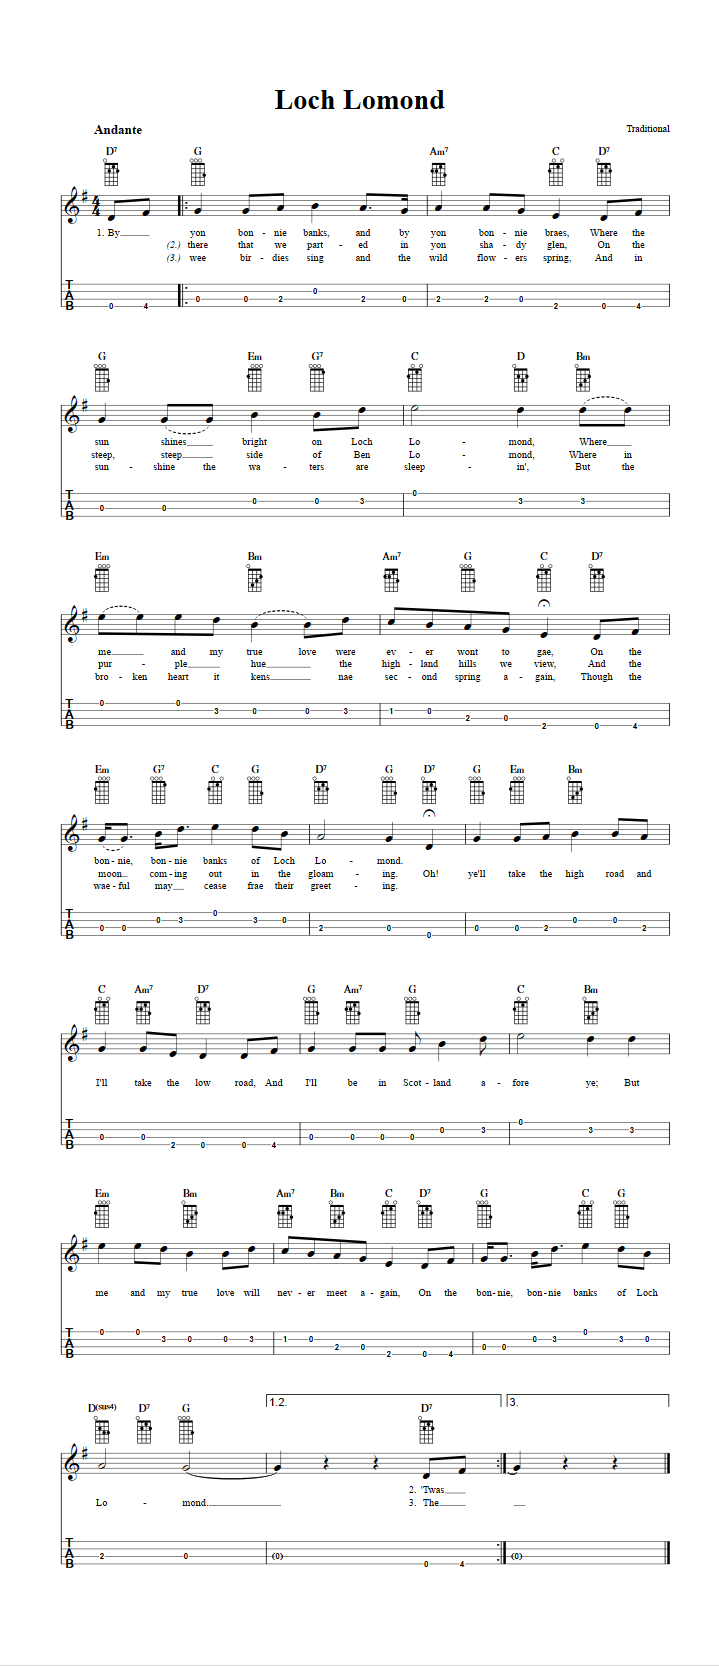 loch lomond chords sheet music and tab for baritone